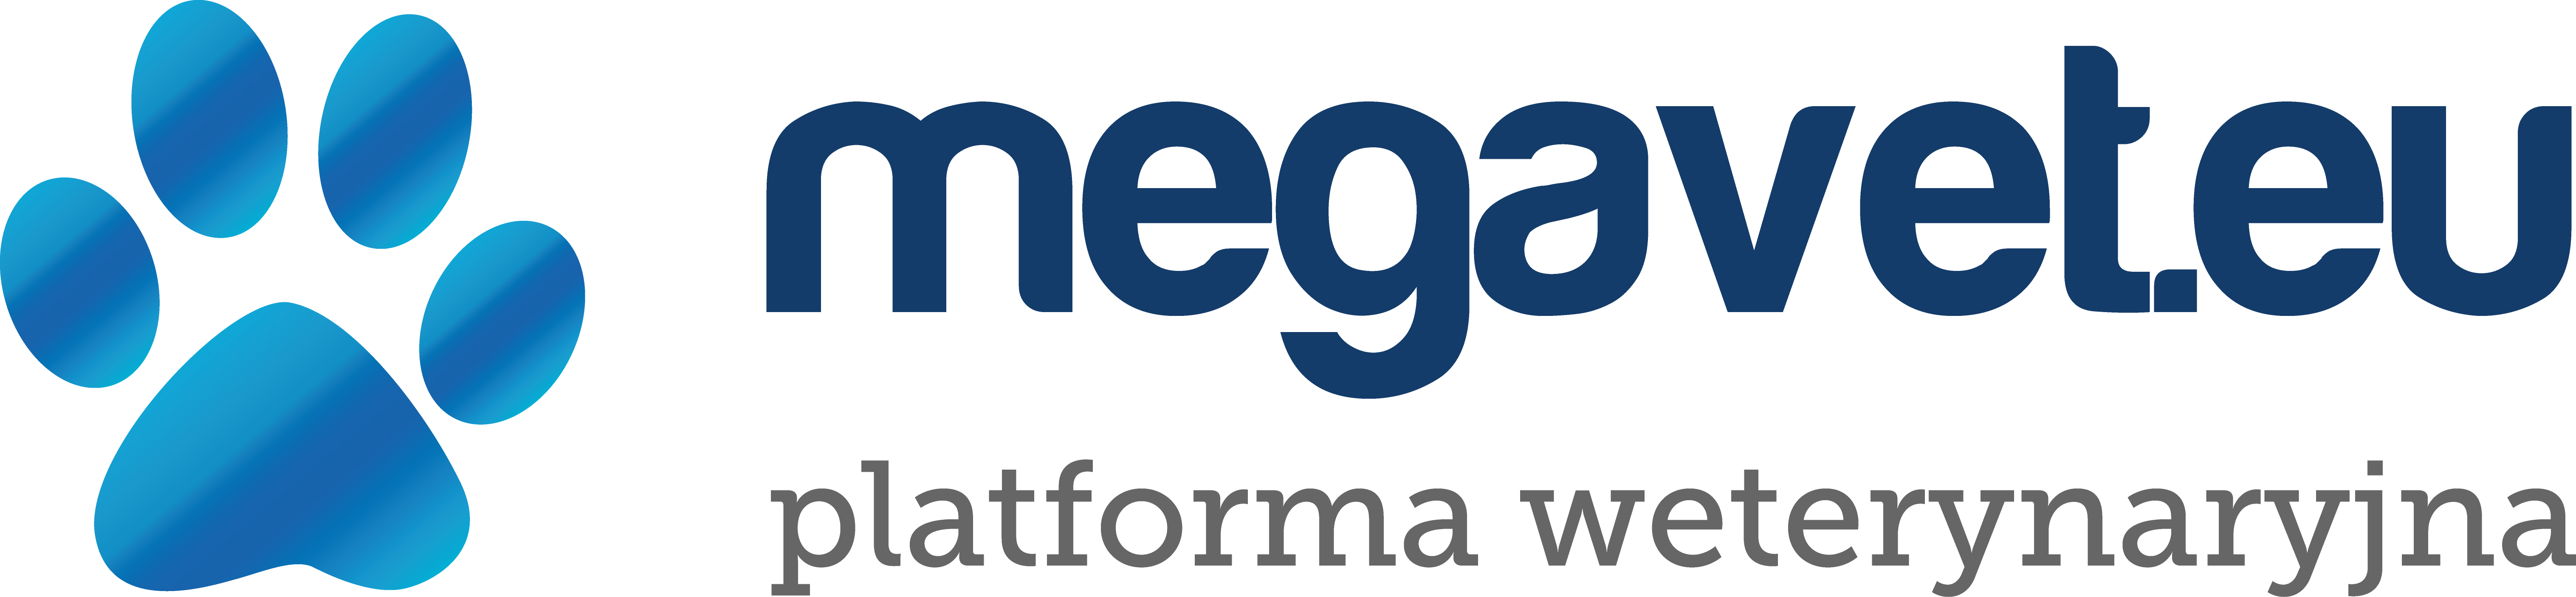  Directory of veterinary companies MEGAVET 